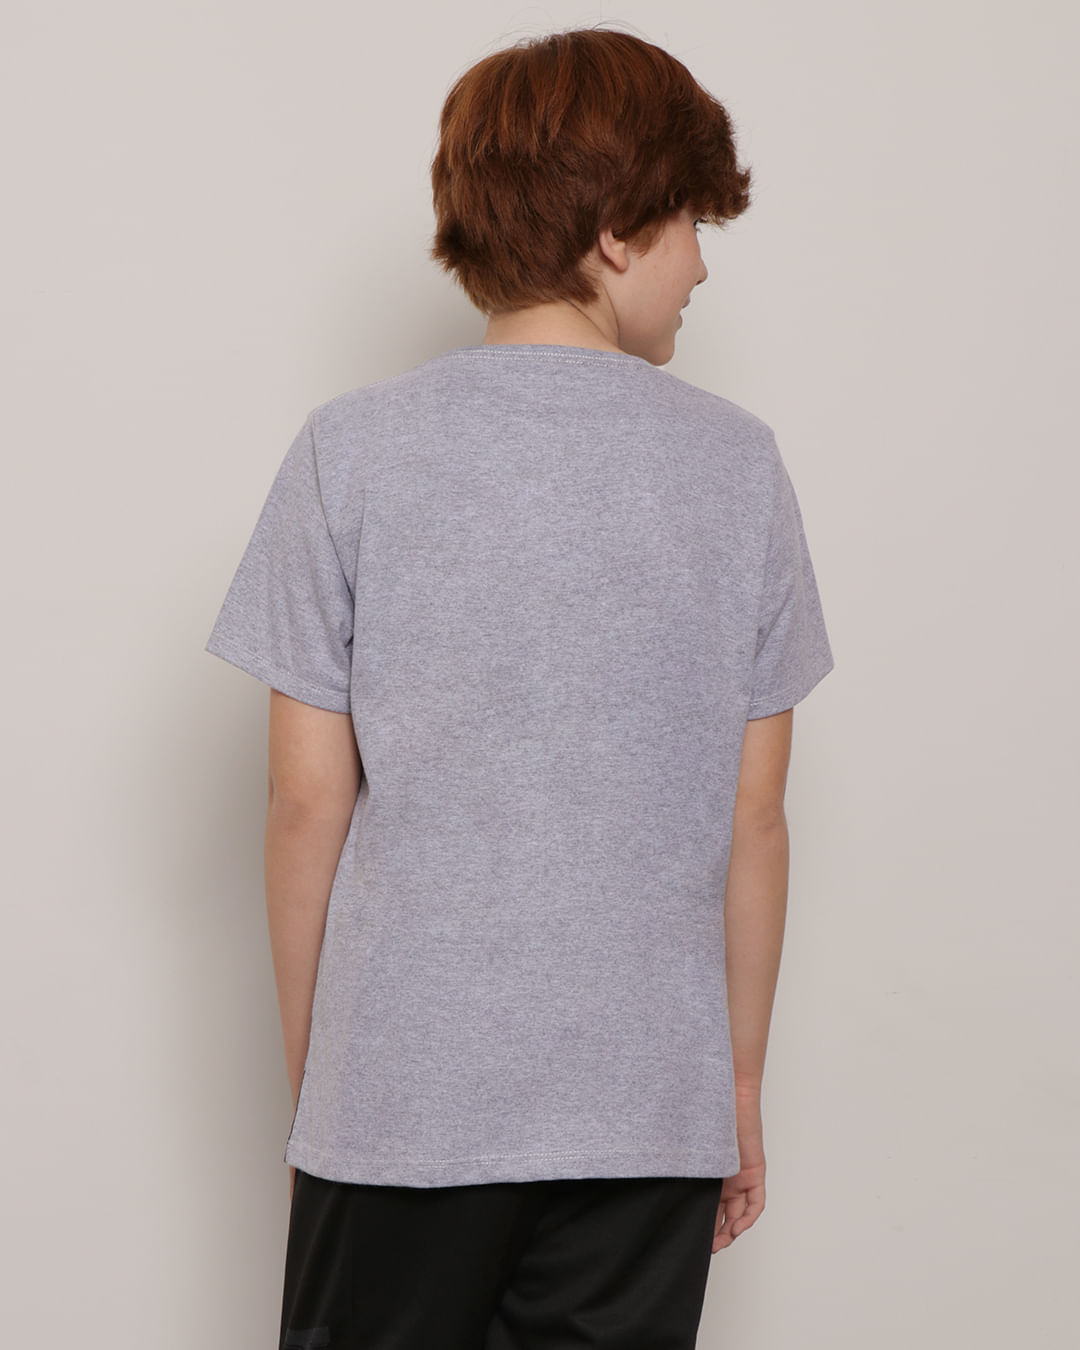 Camiseta-Juvenil-Manga-Curta-Estampa-Skateboard-e-Chamas-Cinza